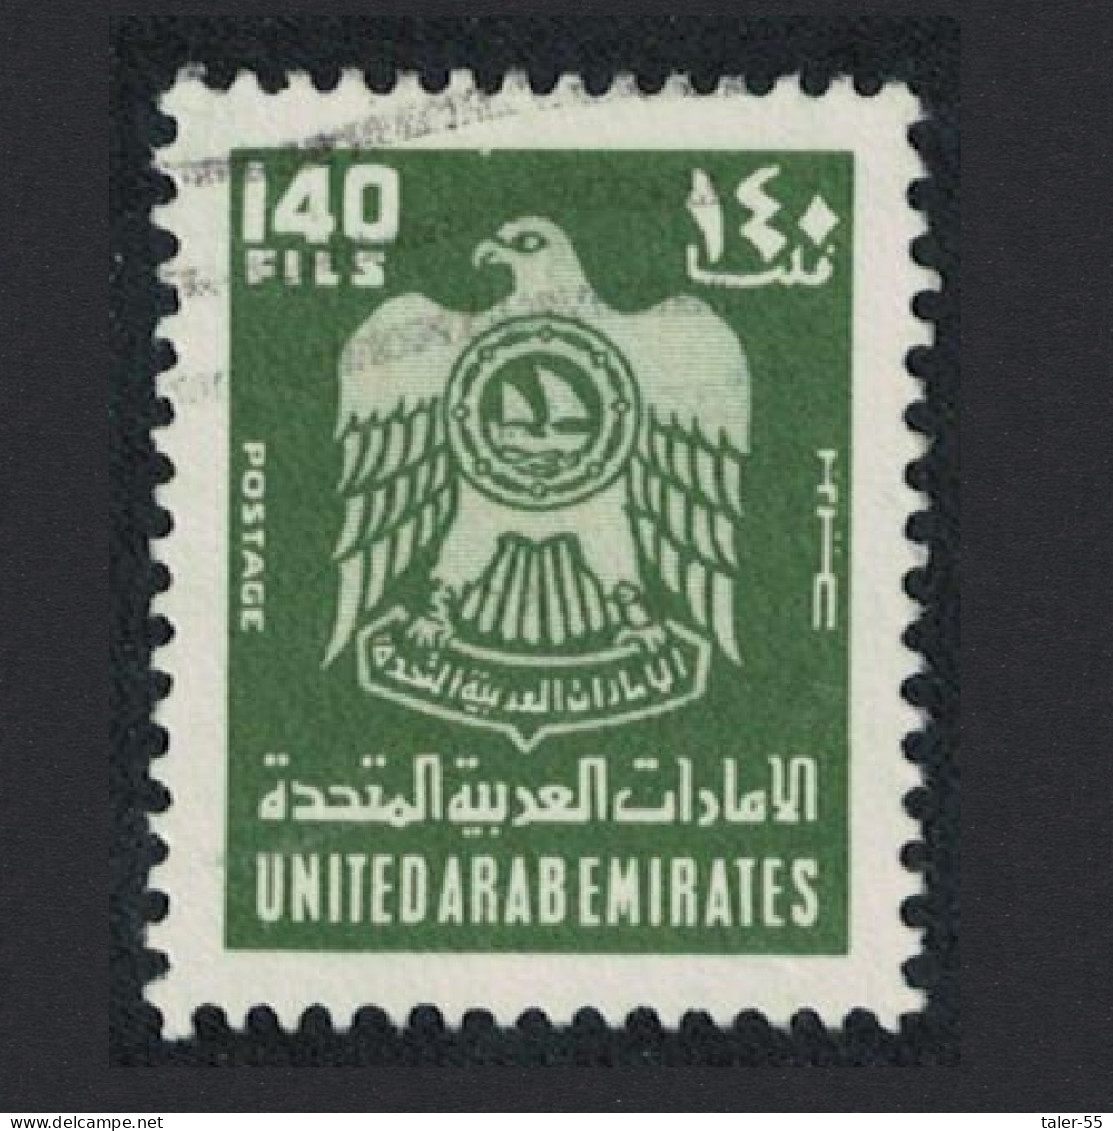 United Arab Emirates Crest Bird 140 Fils 1976 MNH SG#66 MI#66 - Emirati Arabi Uniti